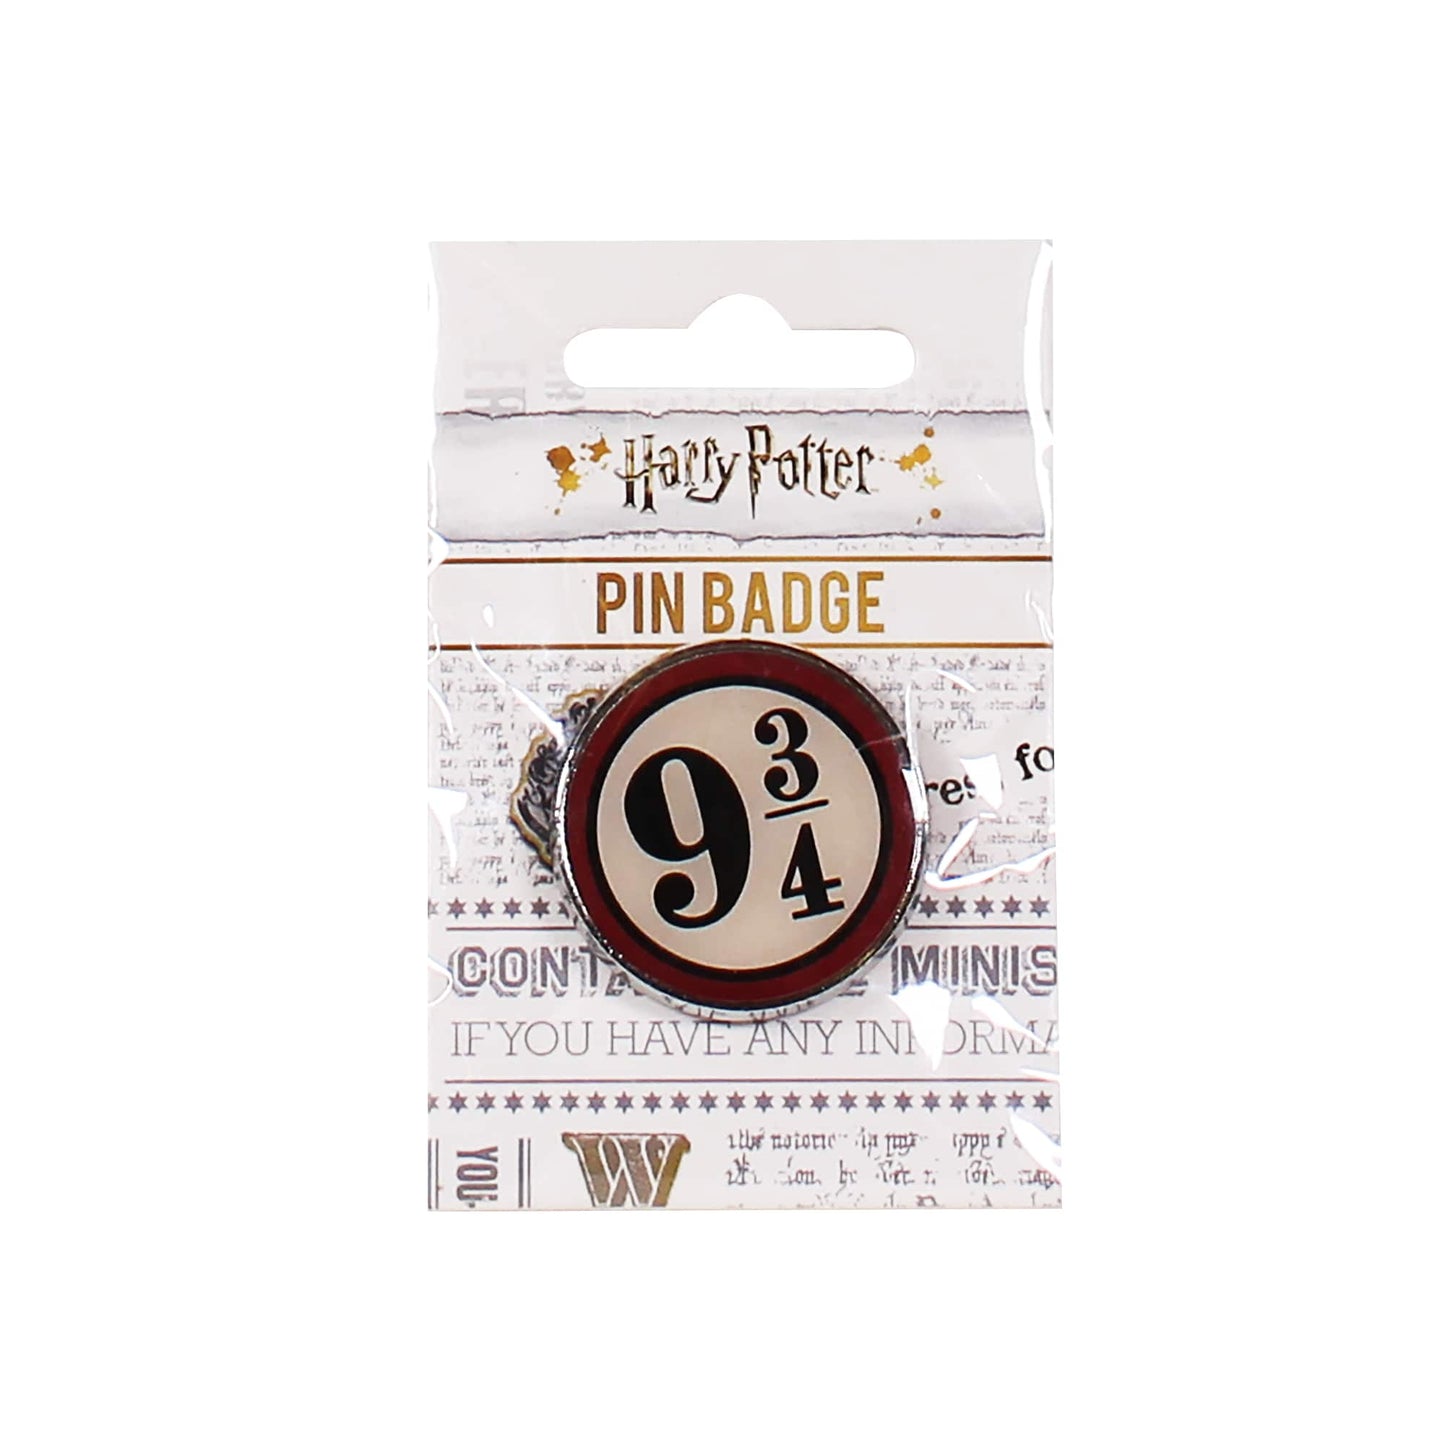 Platform 9 3/4 Pin Badge - Harry Potter Pin Badges